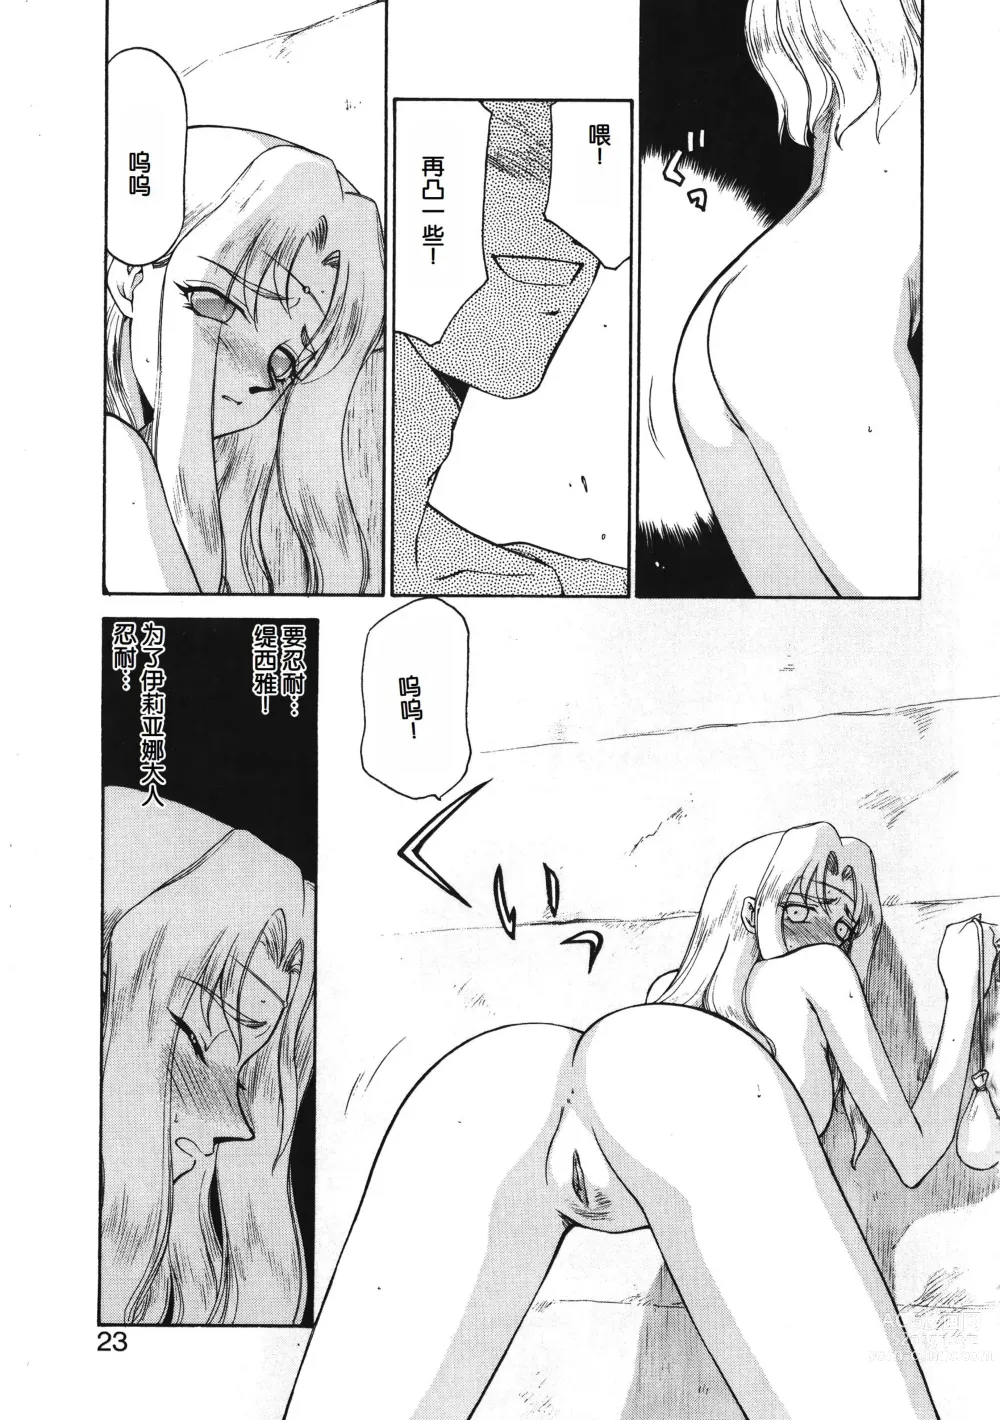 Page 23 of manga Bad Moon...